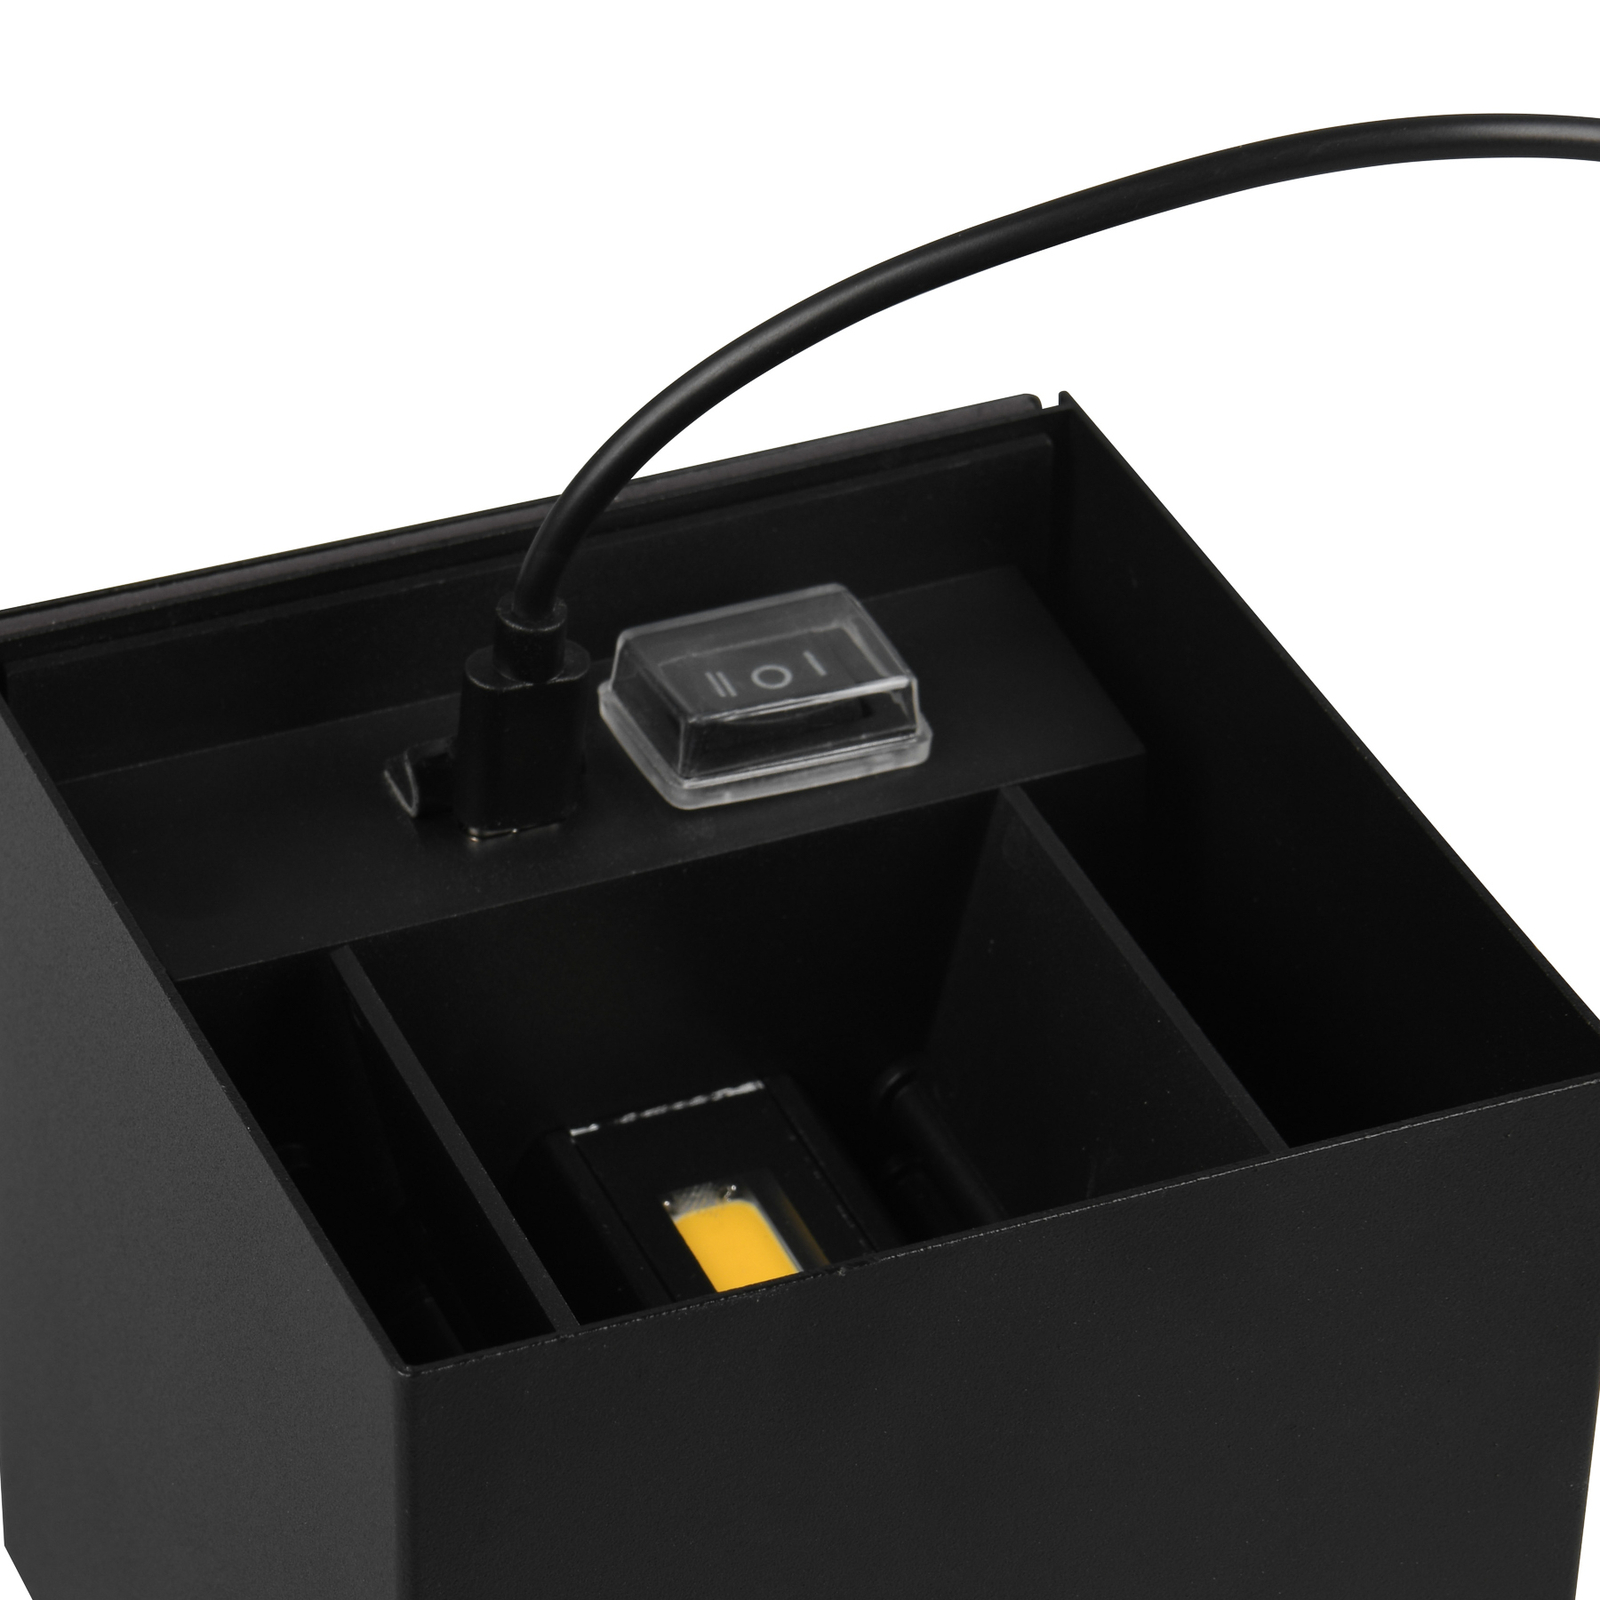 LED-Akku-Außenwandlampe Talent, schwarz, Breite 10 cm Sensor